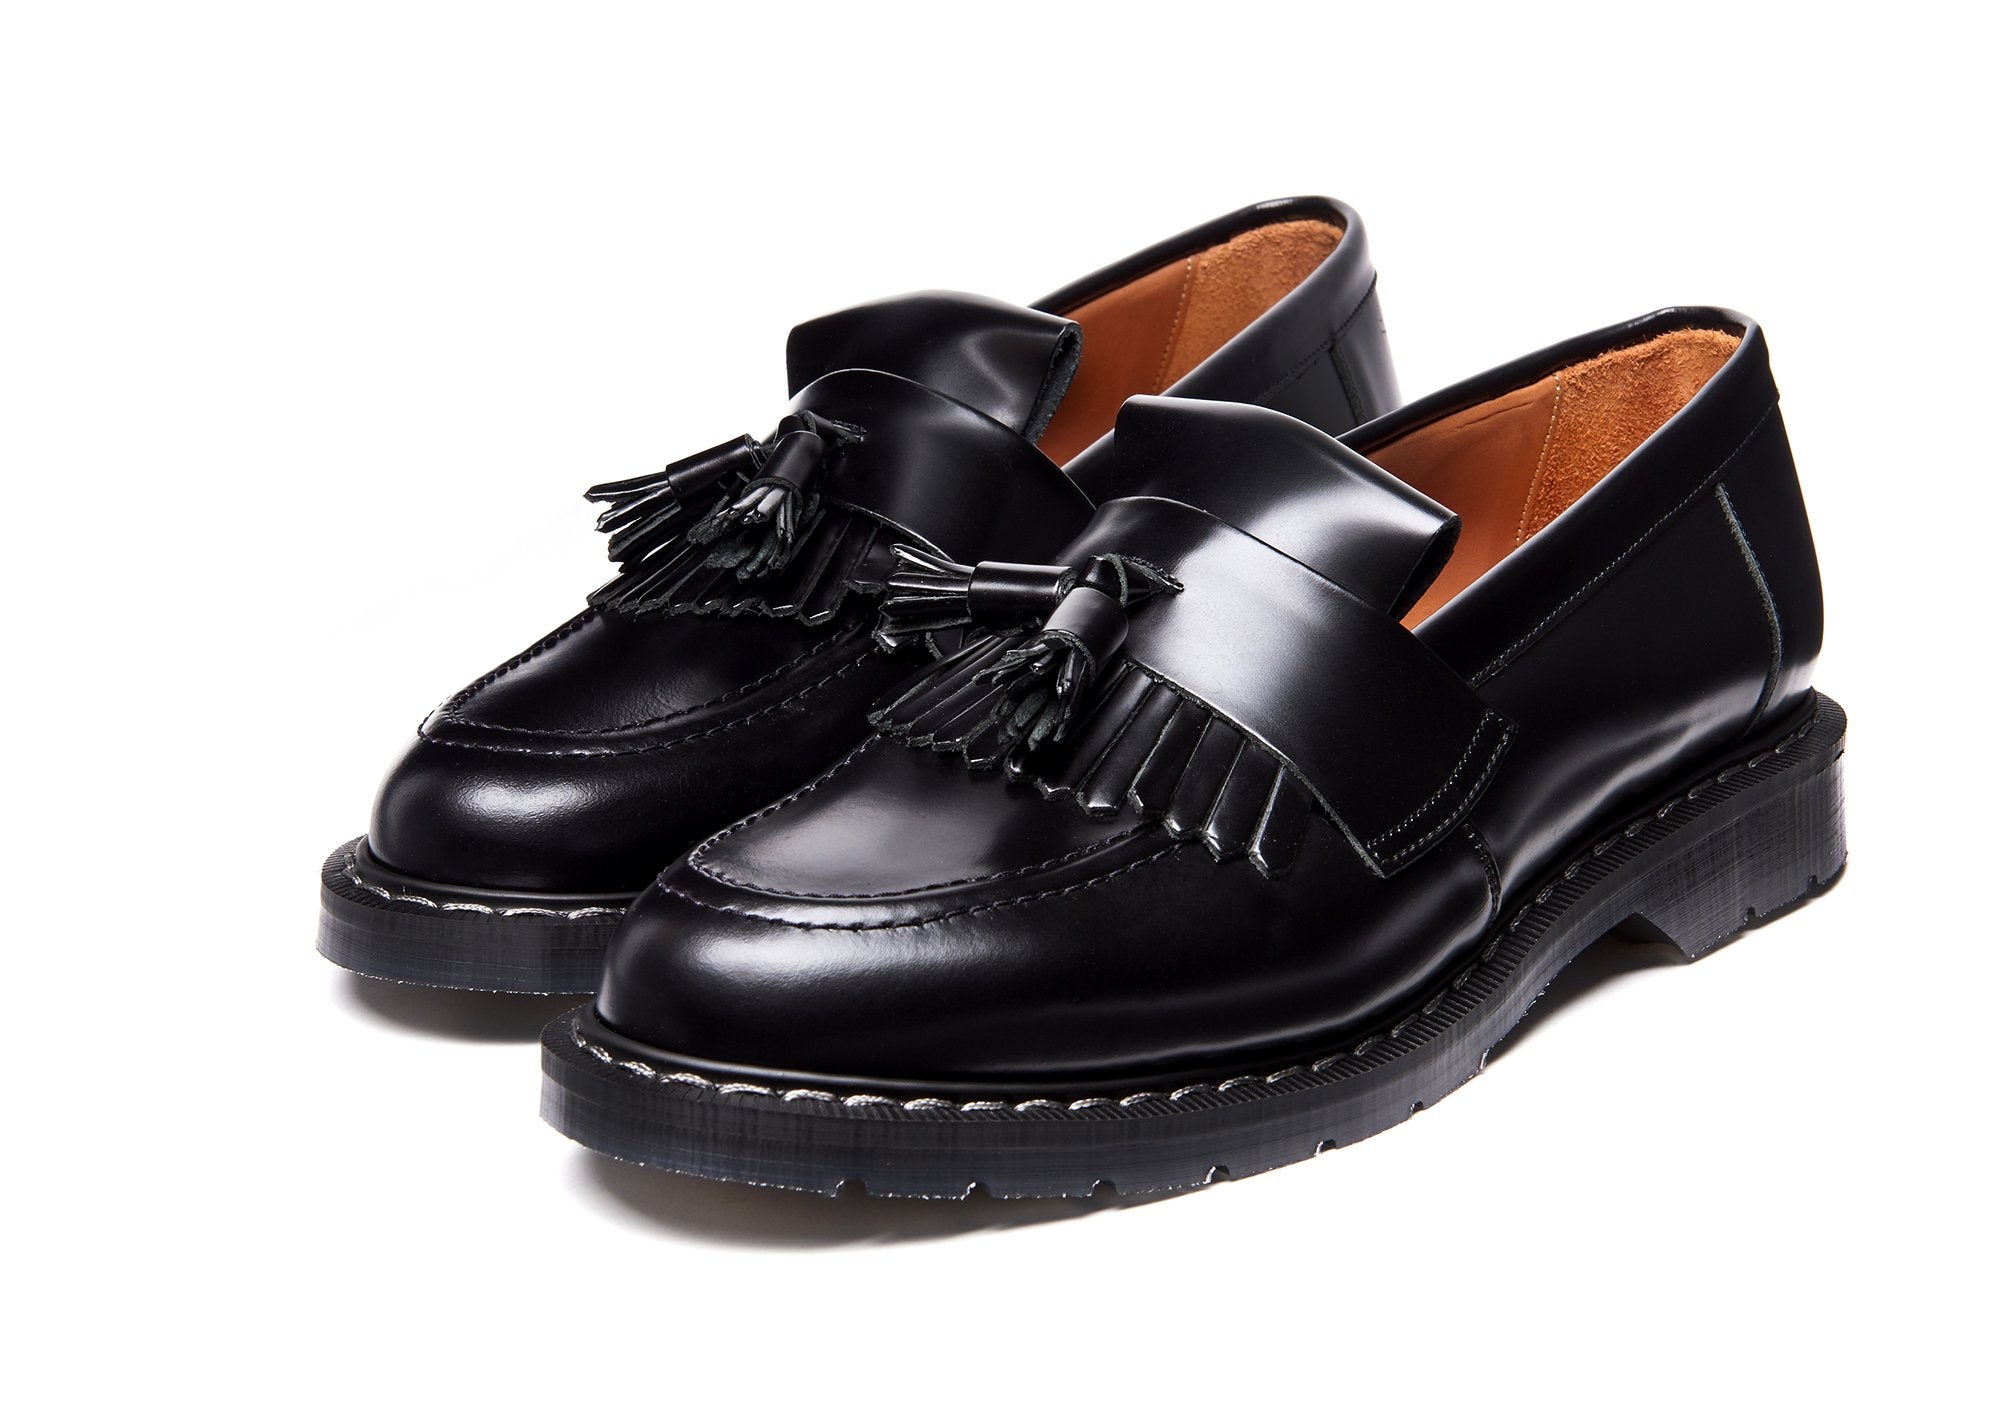 SUPERGLAMOUROUS Louis Men's Shoes Black Silk Patent Leather Tassel